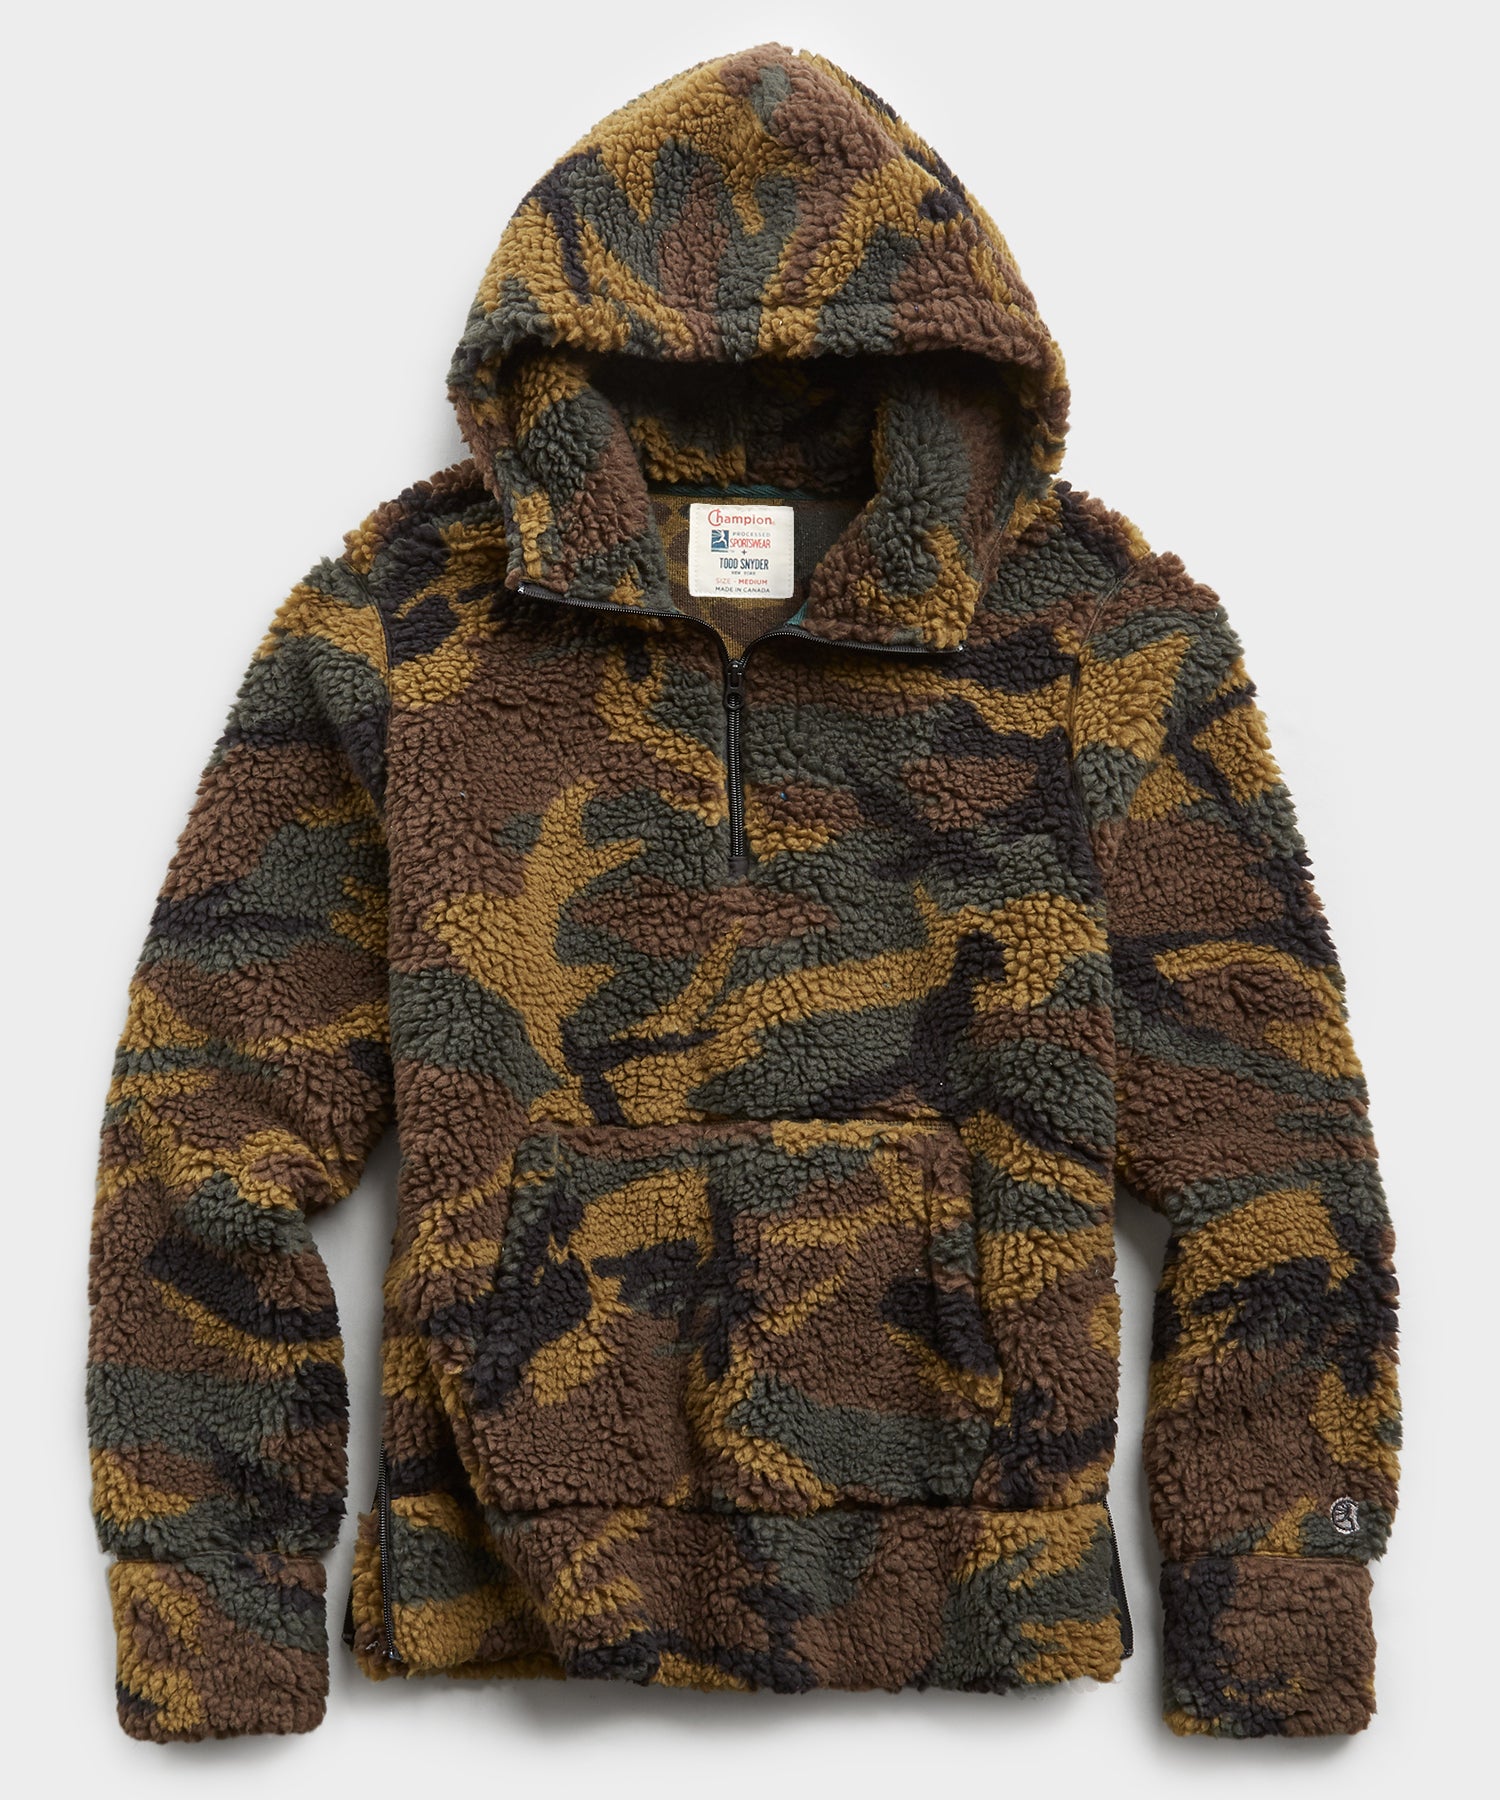 camouflage champion hoodie